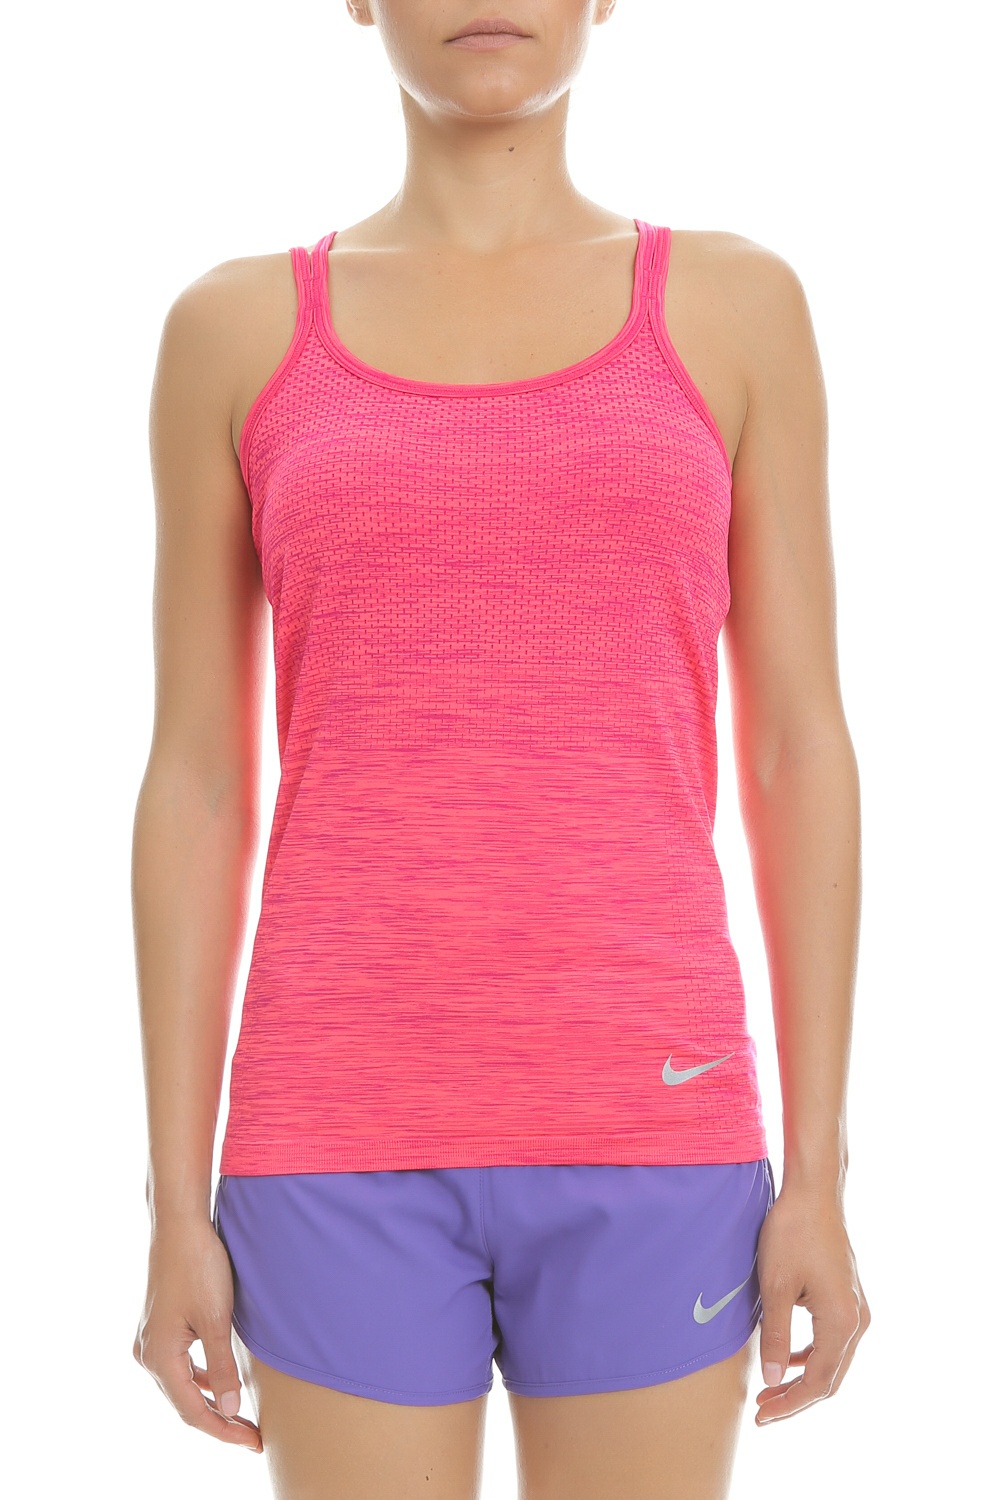 NIKE - Γυναικείο αθλητικό φανελάκι Nike φούξια Γυναικεία/Ρούχα/Αθλητικά/T-shirt-Τοπ